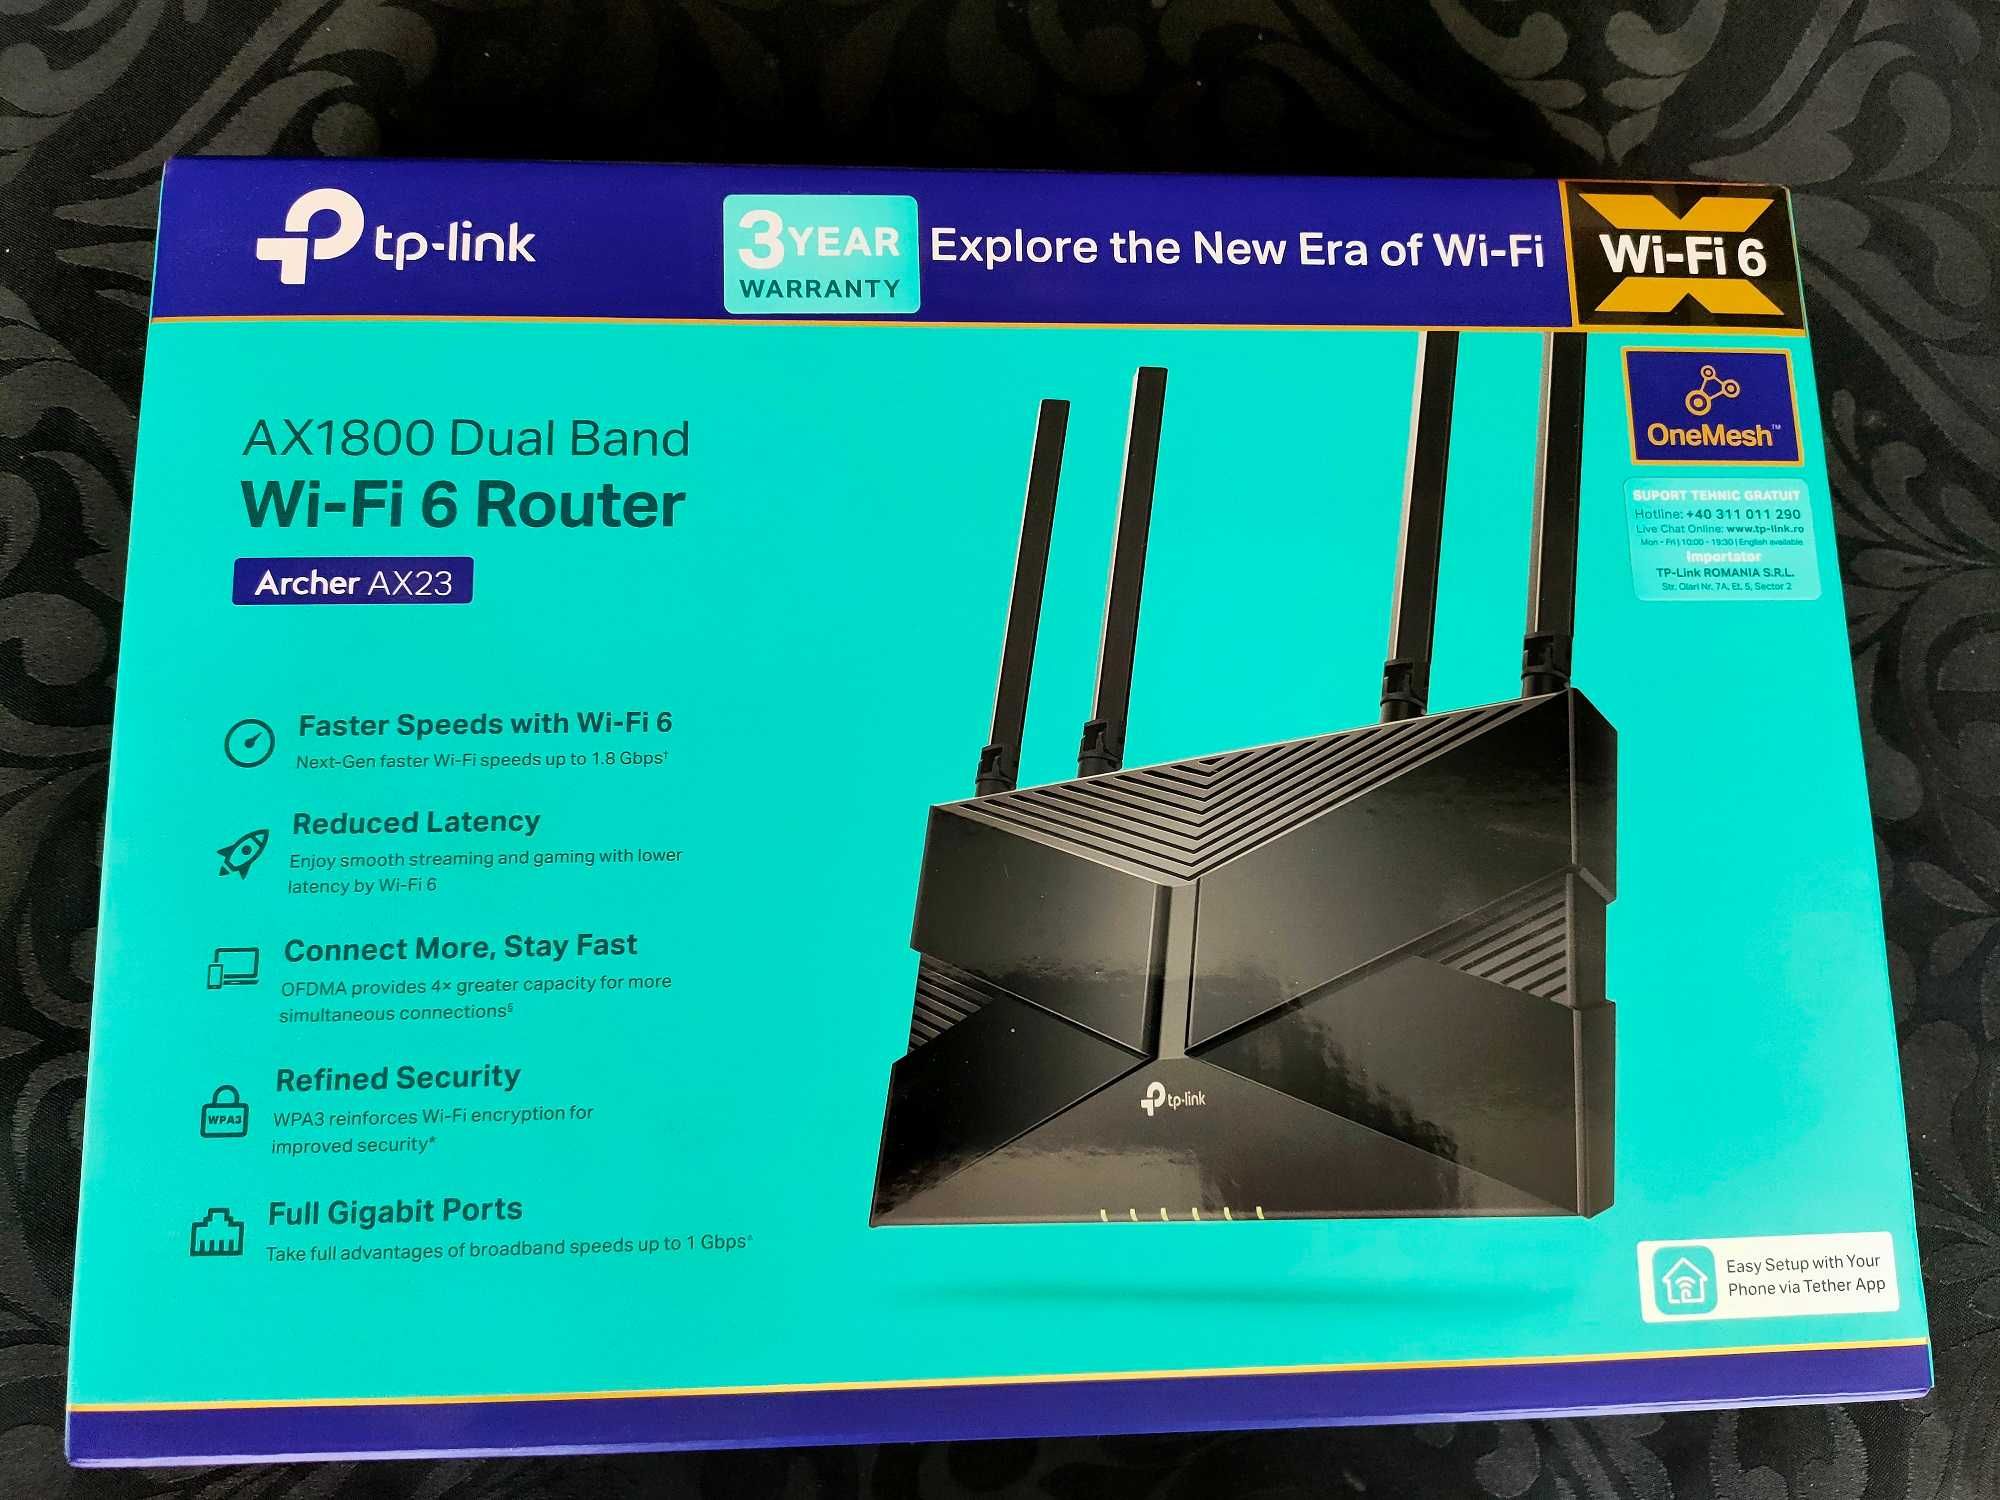 Router TP-LINK Archer AX23, AX1800